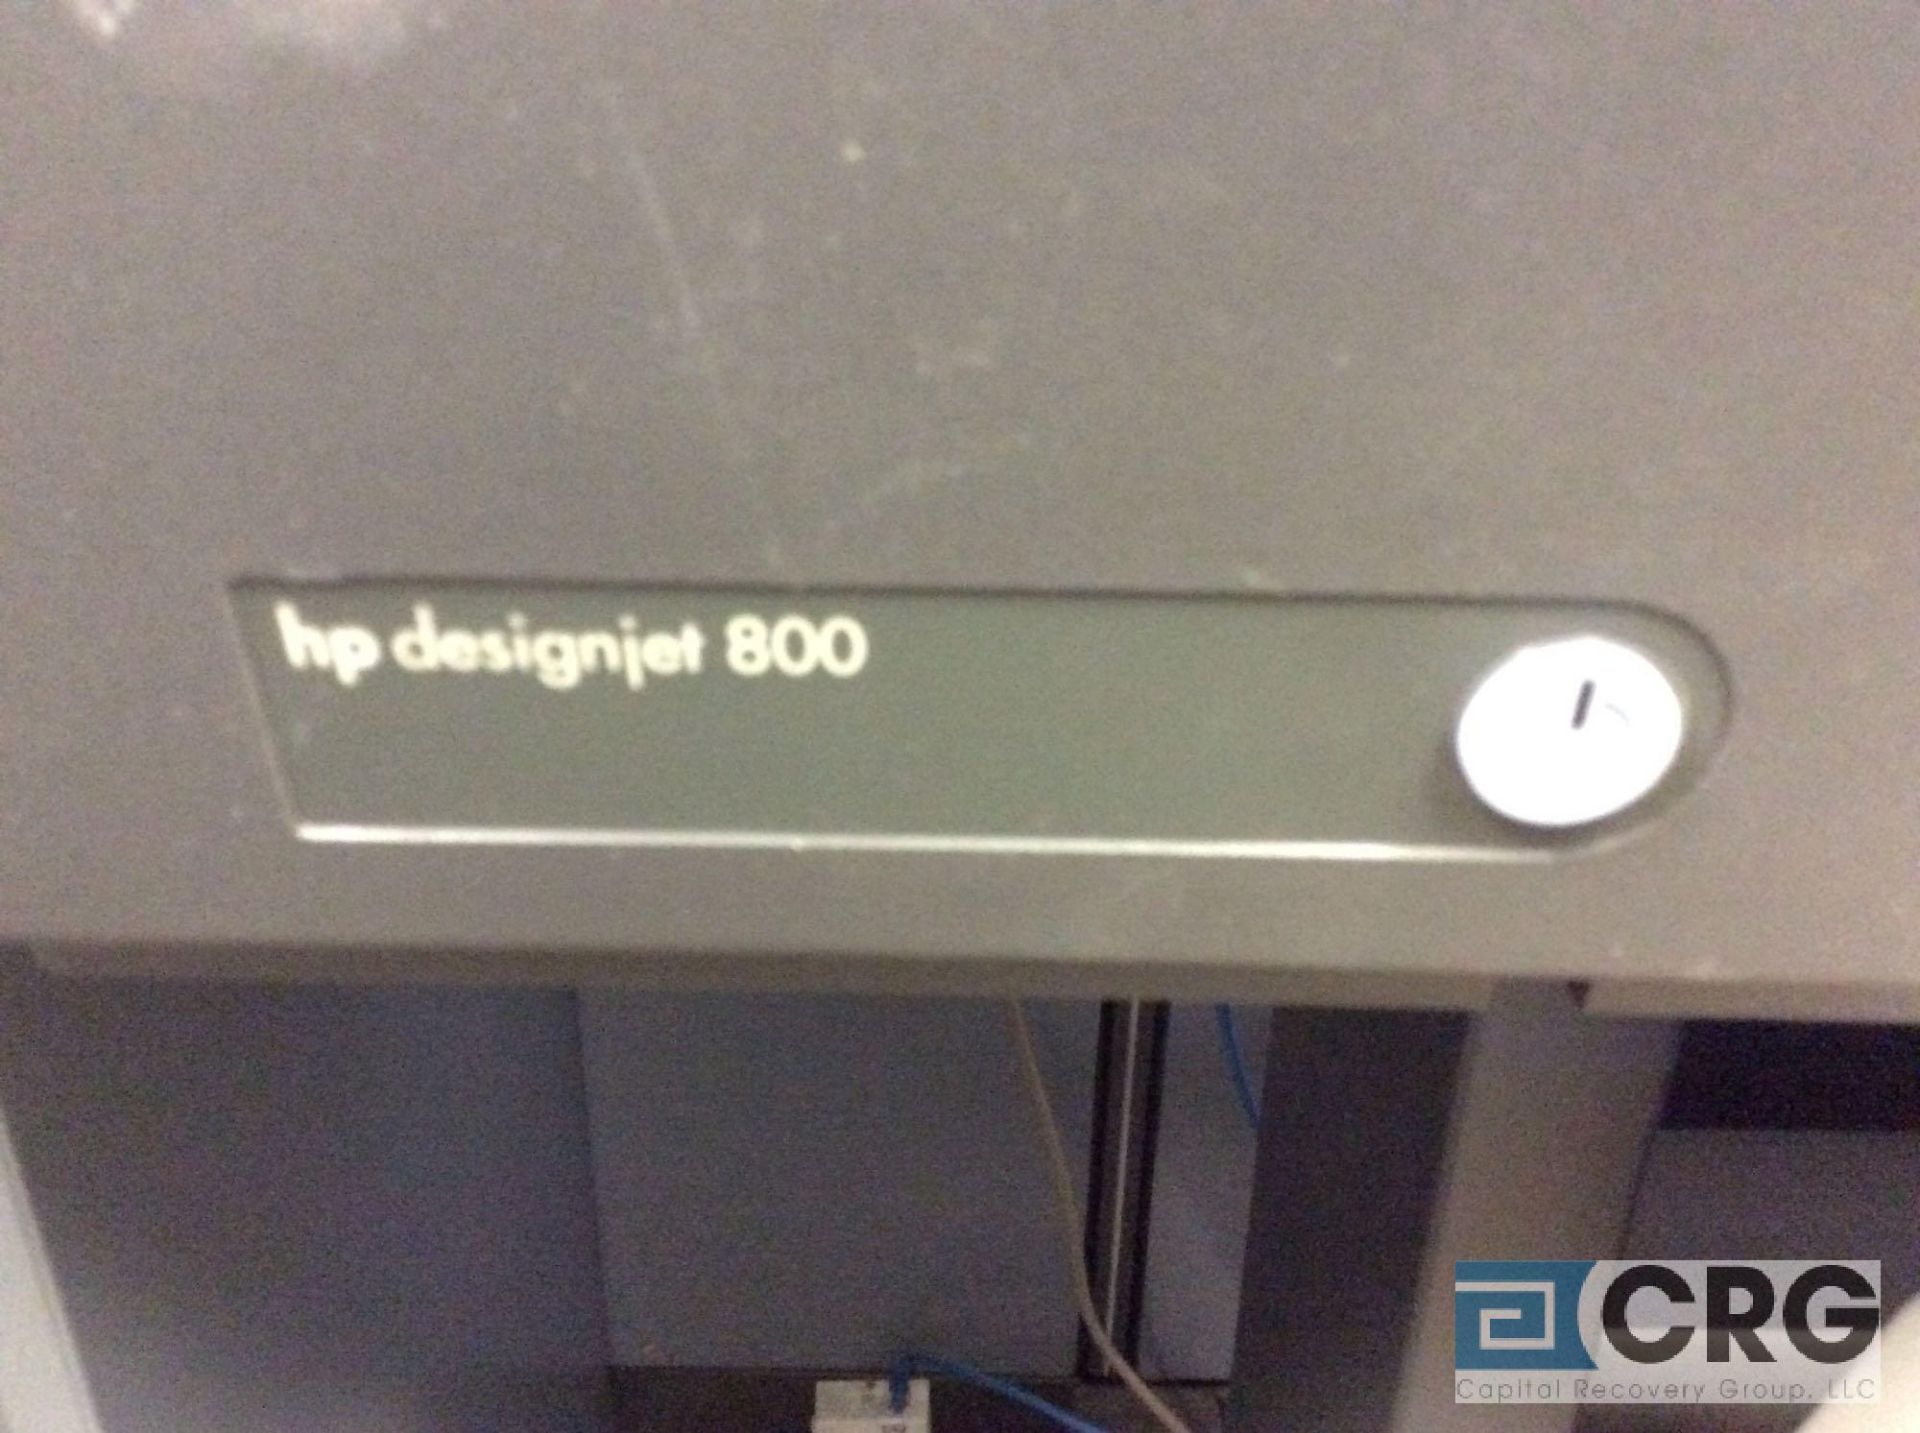 HP Design Jet 800 blueprint plotter - Image 3 of 4